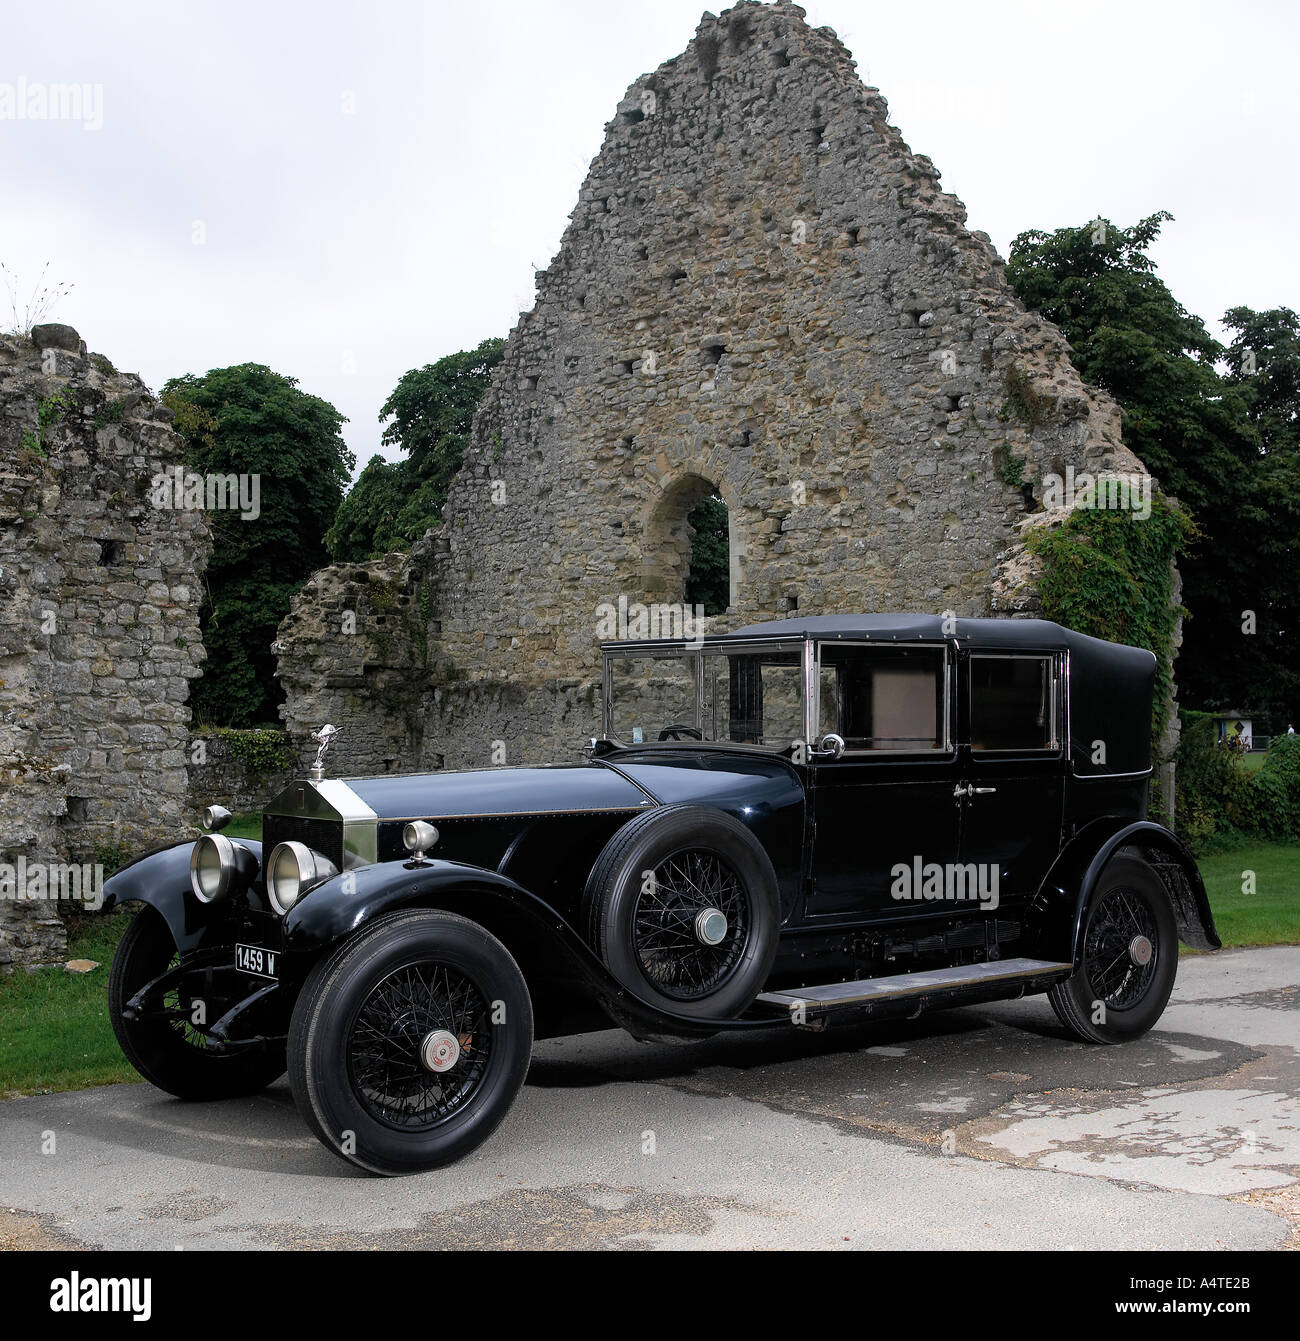 1924 Rolls Royce Silver Ghost 40-50 hp belonging to Charlie Chaplin Stock Photo